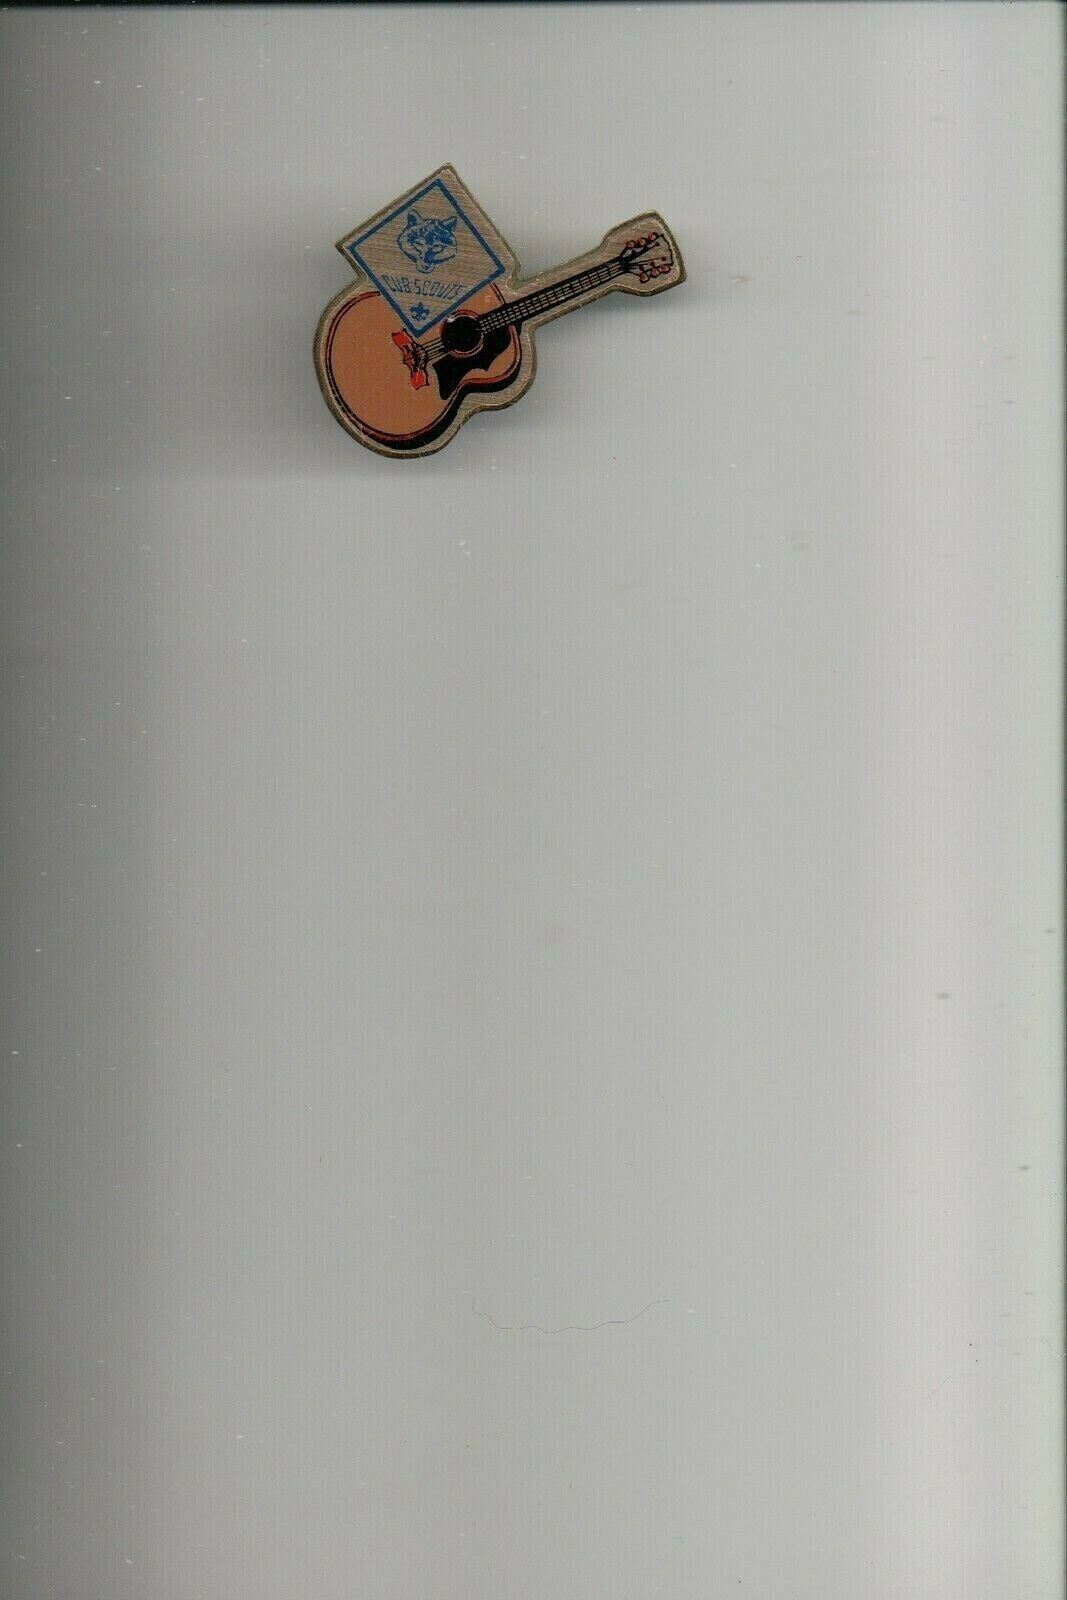 Cub Scout Guitar Hat Pin